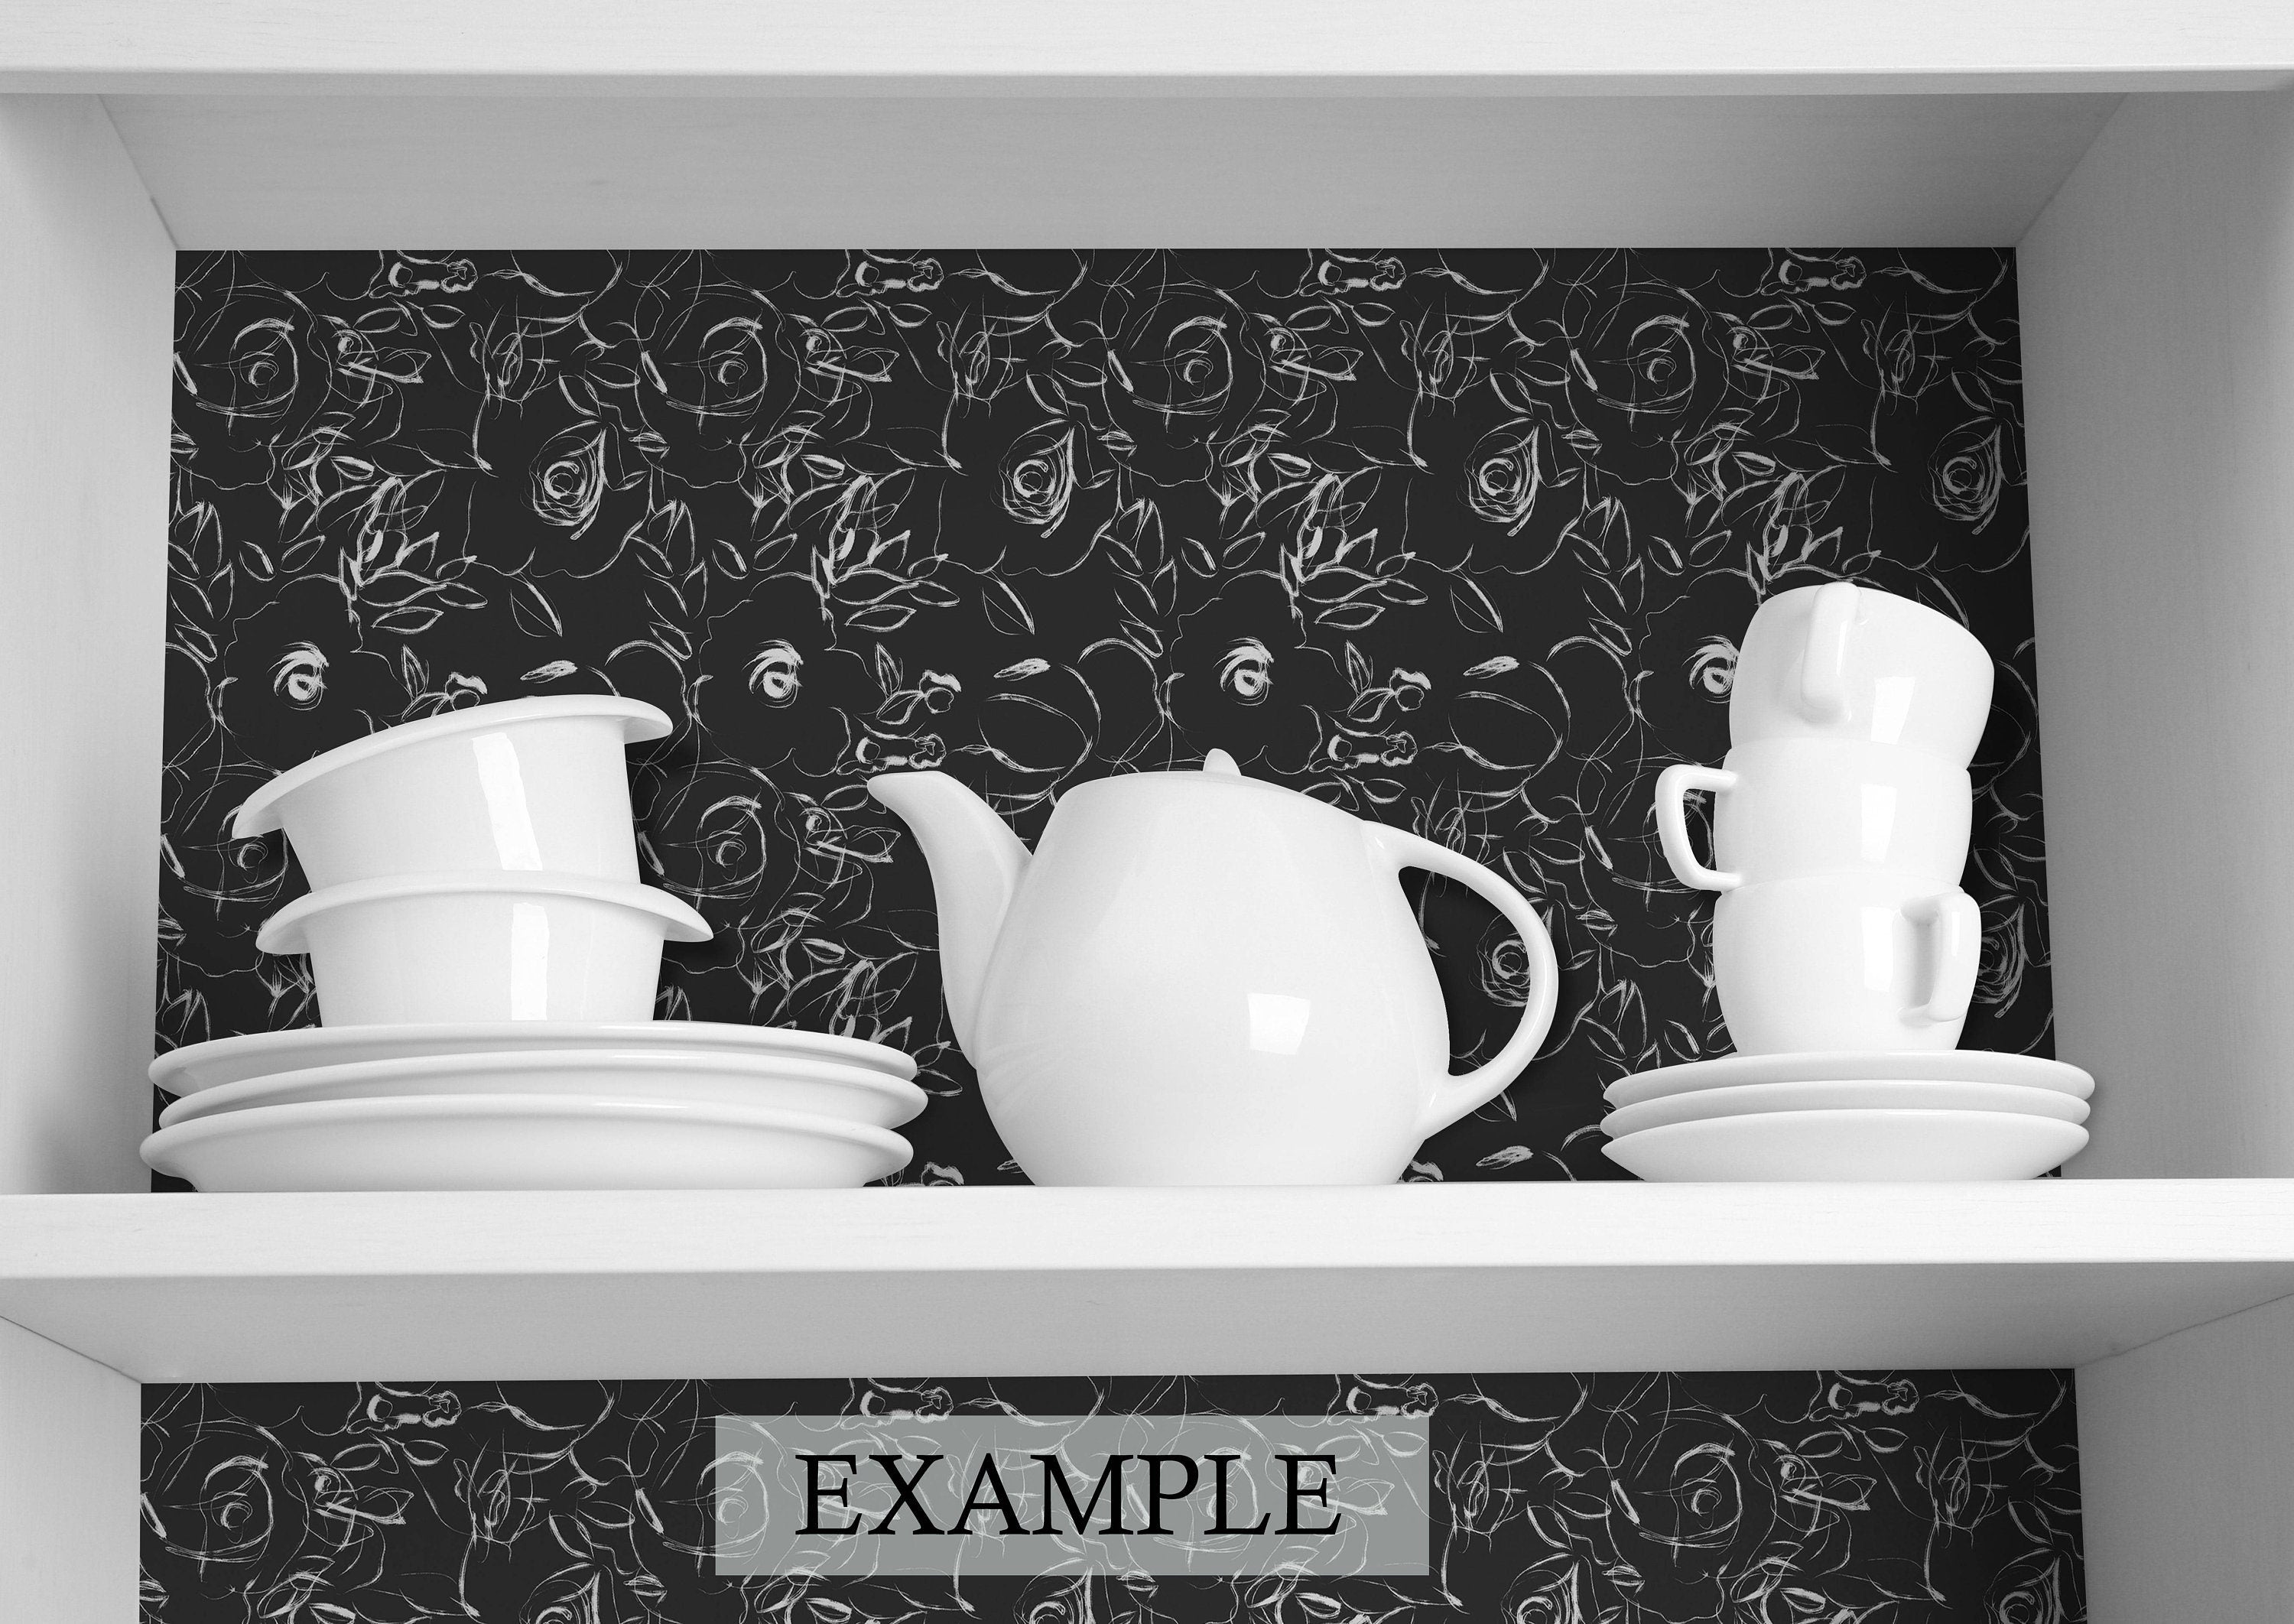 Lemon Floral Kitchen Contact Paper | Peel And Stick Wallpaper | Removable Wallpaper | Shelf Liner | Drawer Liner | Peel and Stick Paper 404